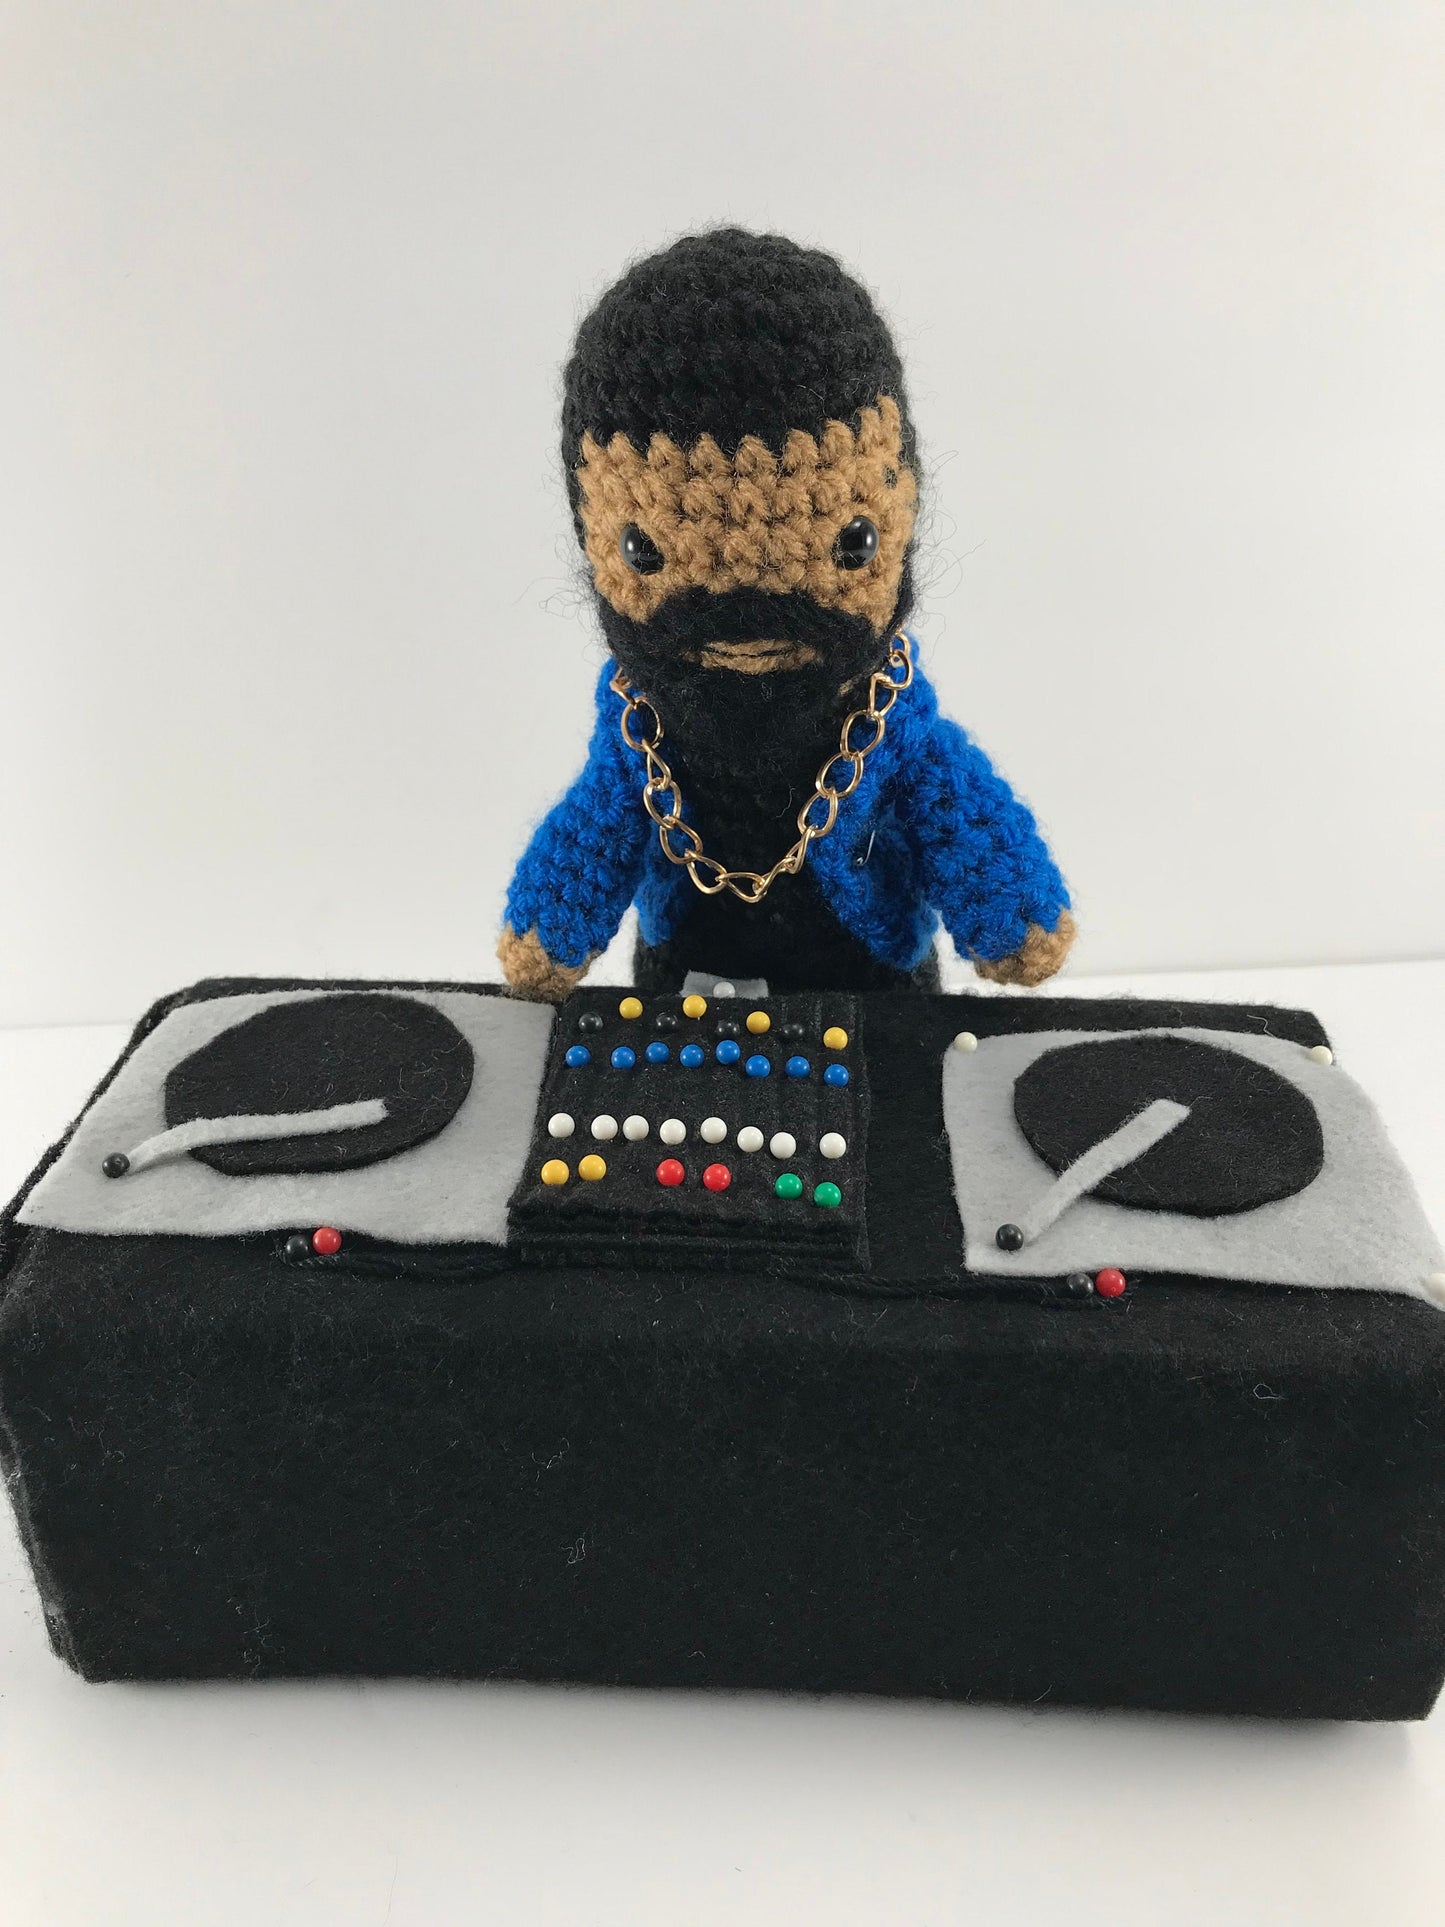 Custom Crochet DJ with decks